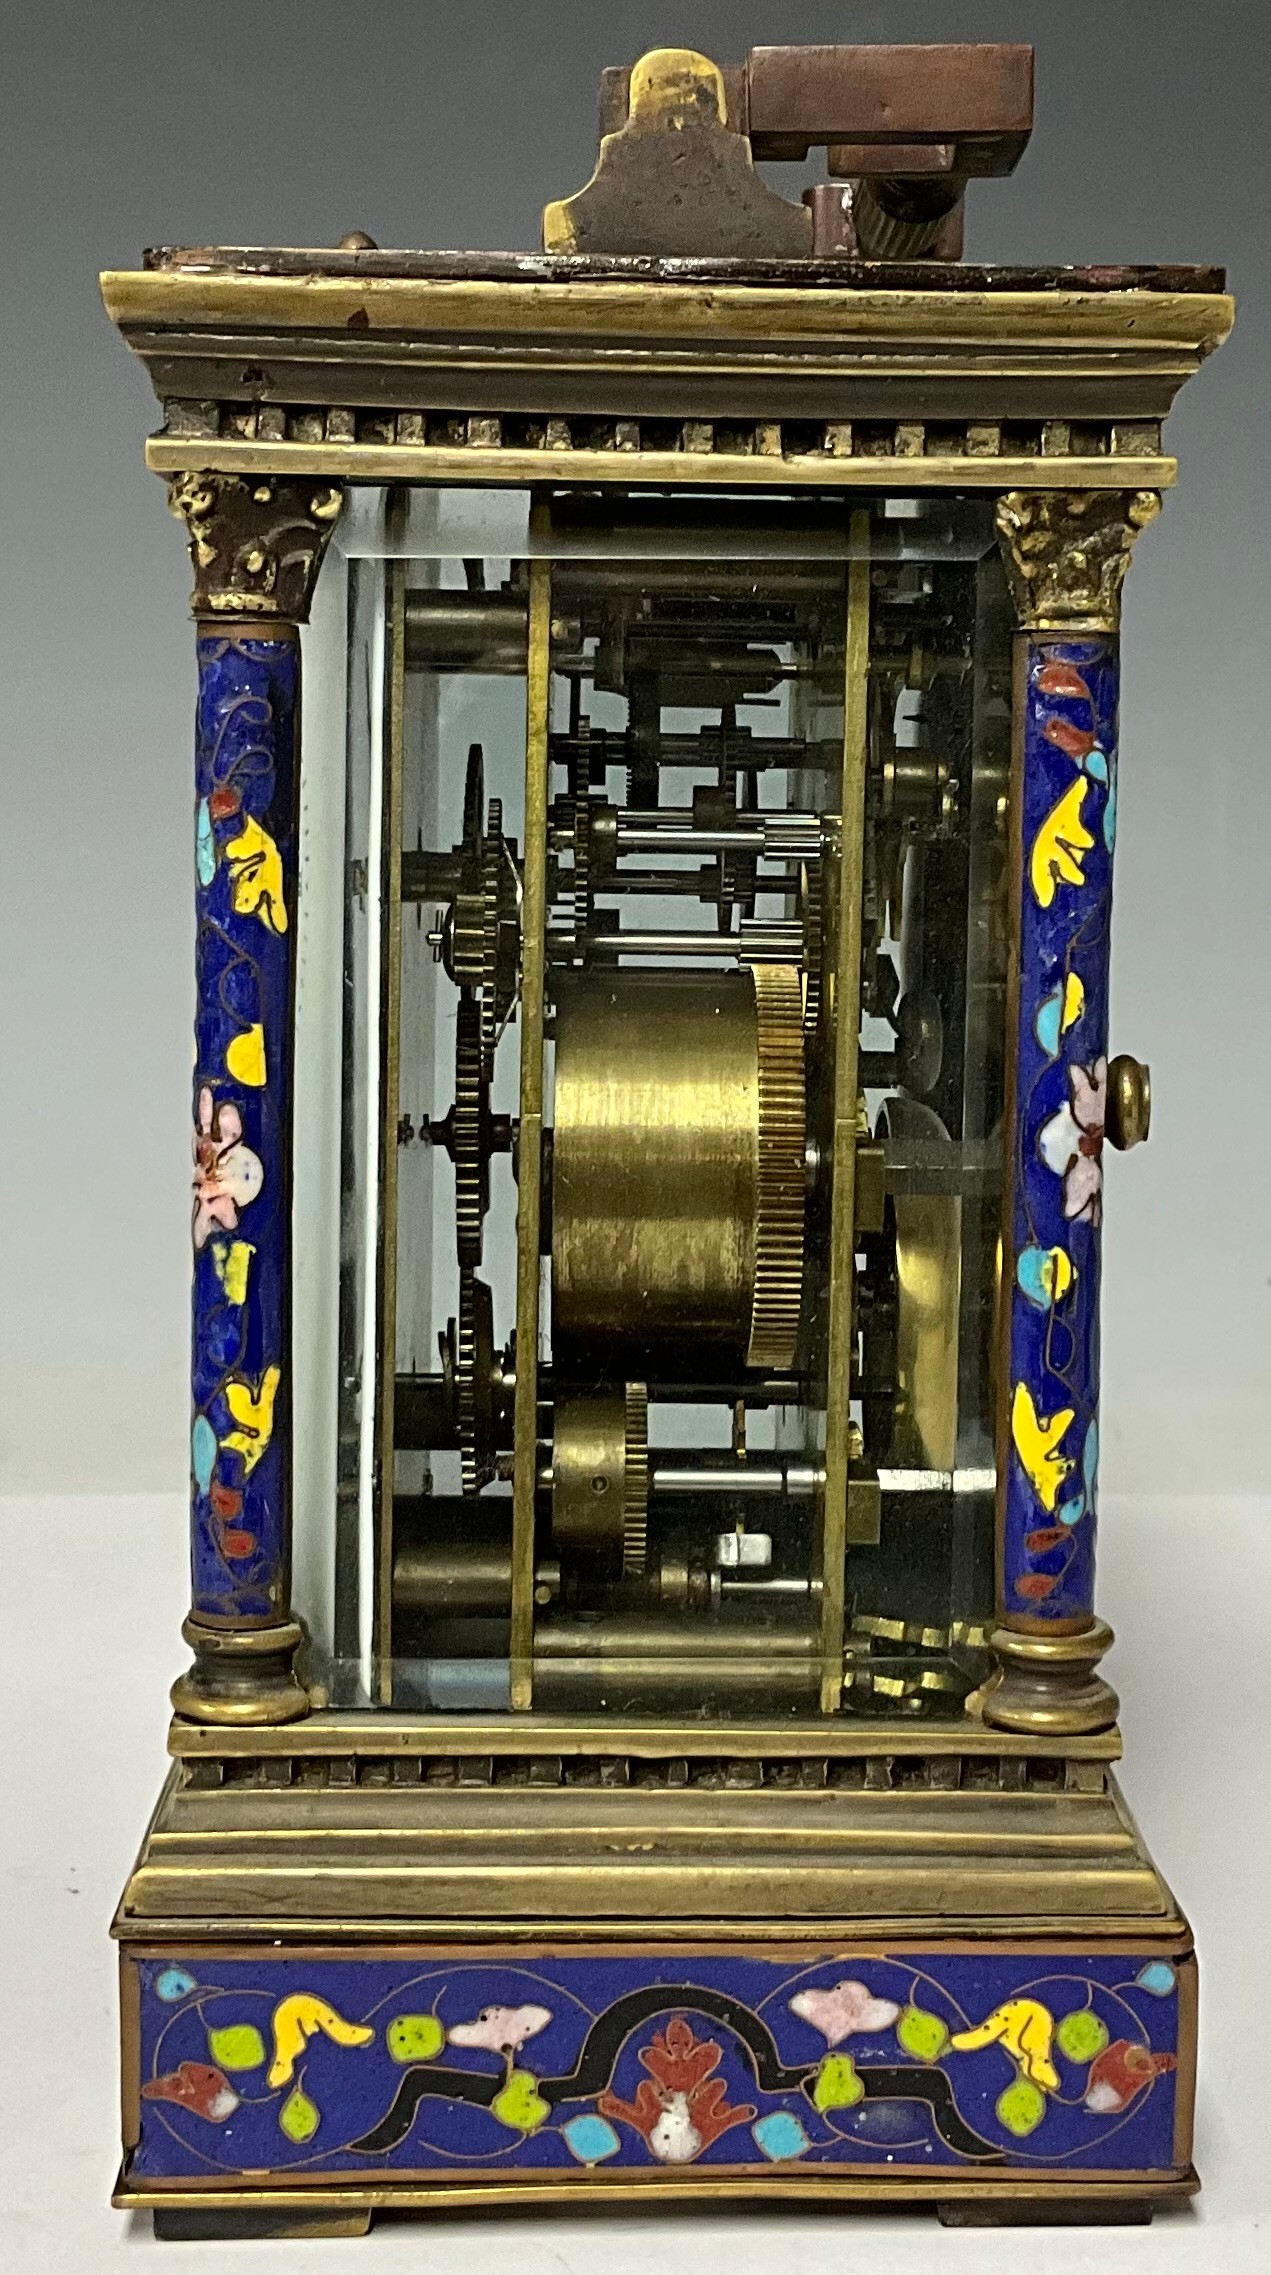 A large cloisonné enamel carriage clock, 19cm high excluding handle - Image 3 of 4